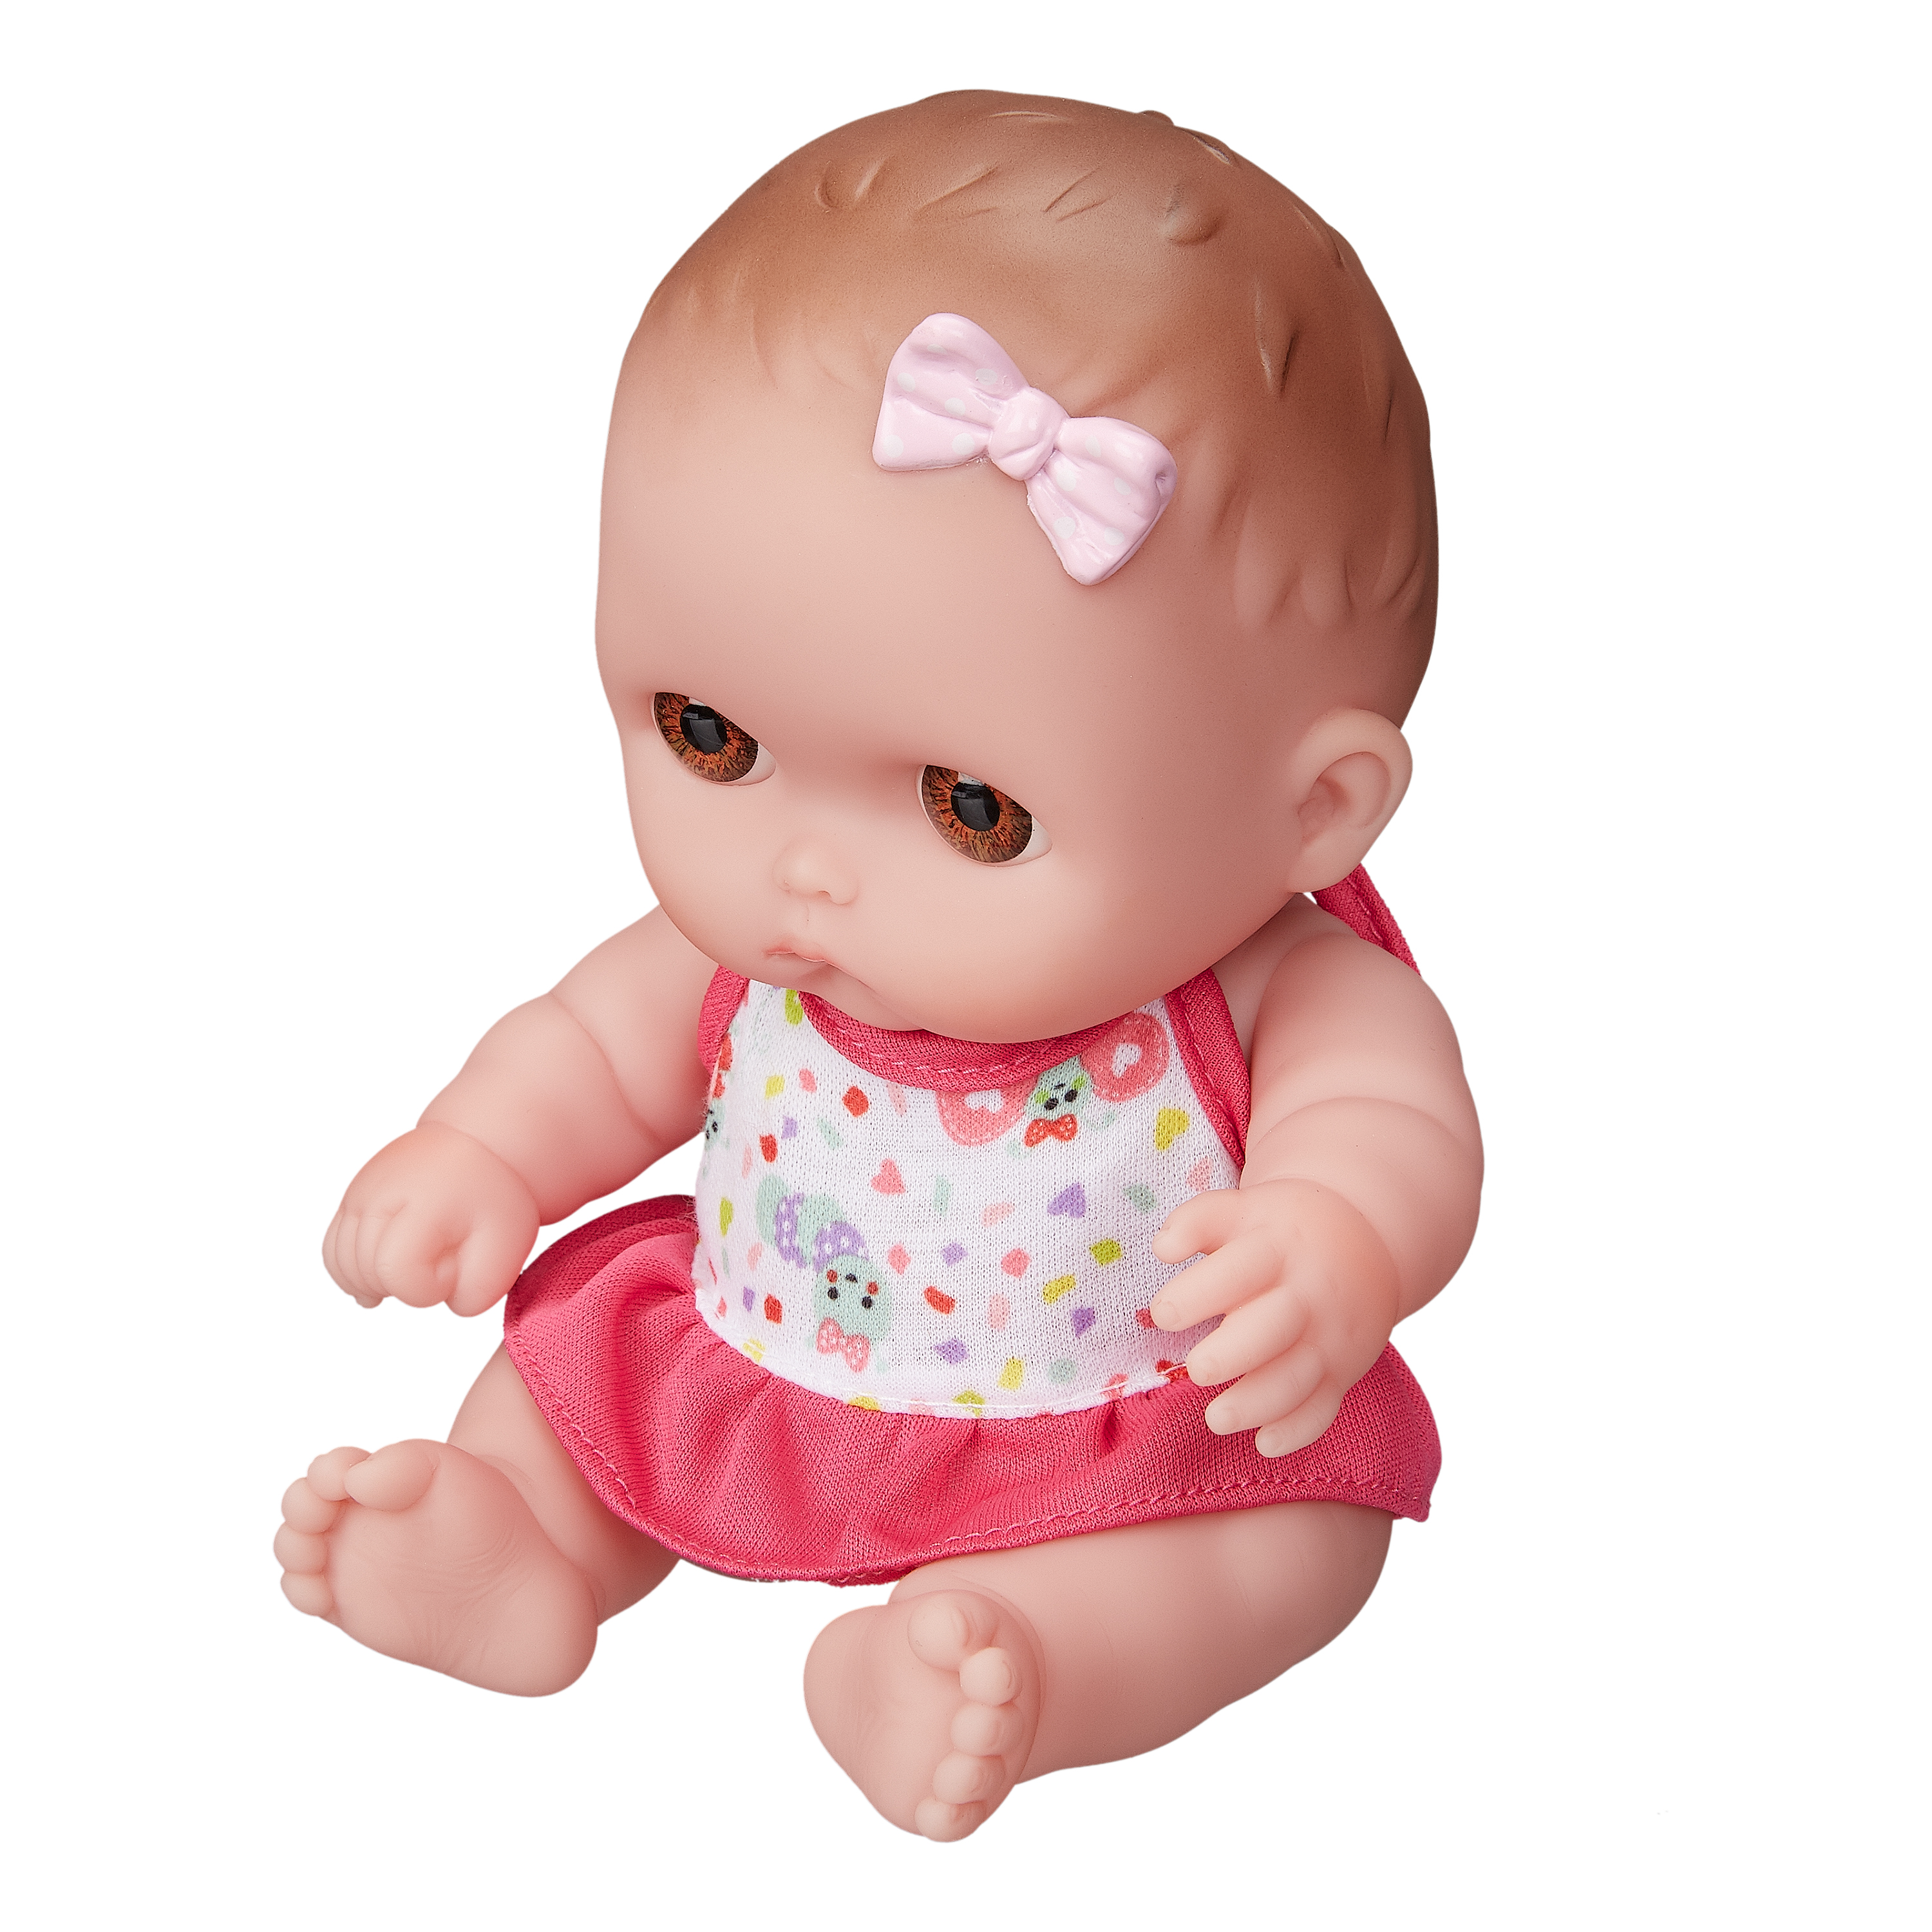 My Sweet Love Lil Cutesies 8.5" Baby Doll - image 3 of 4